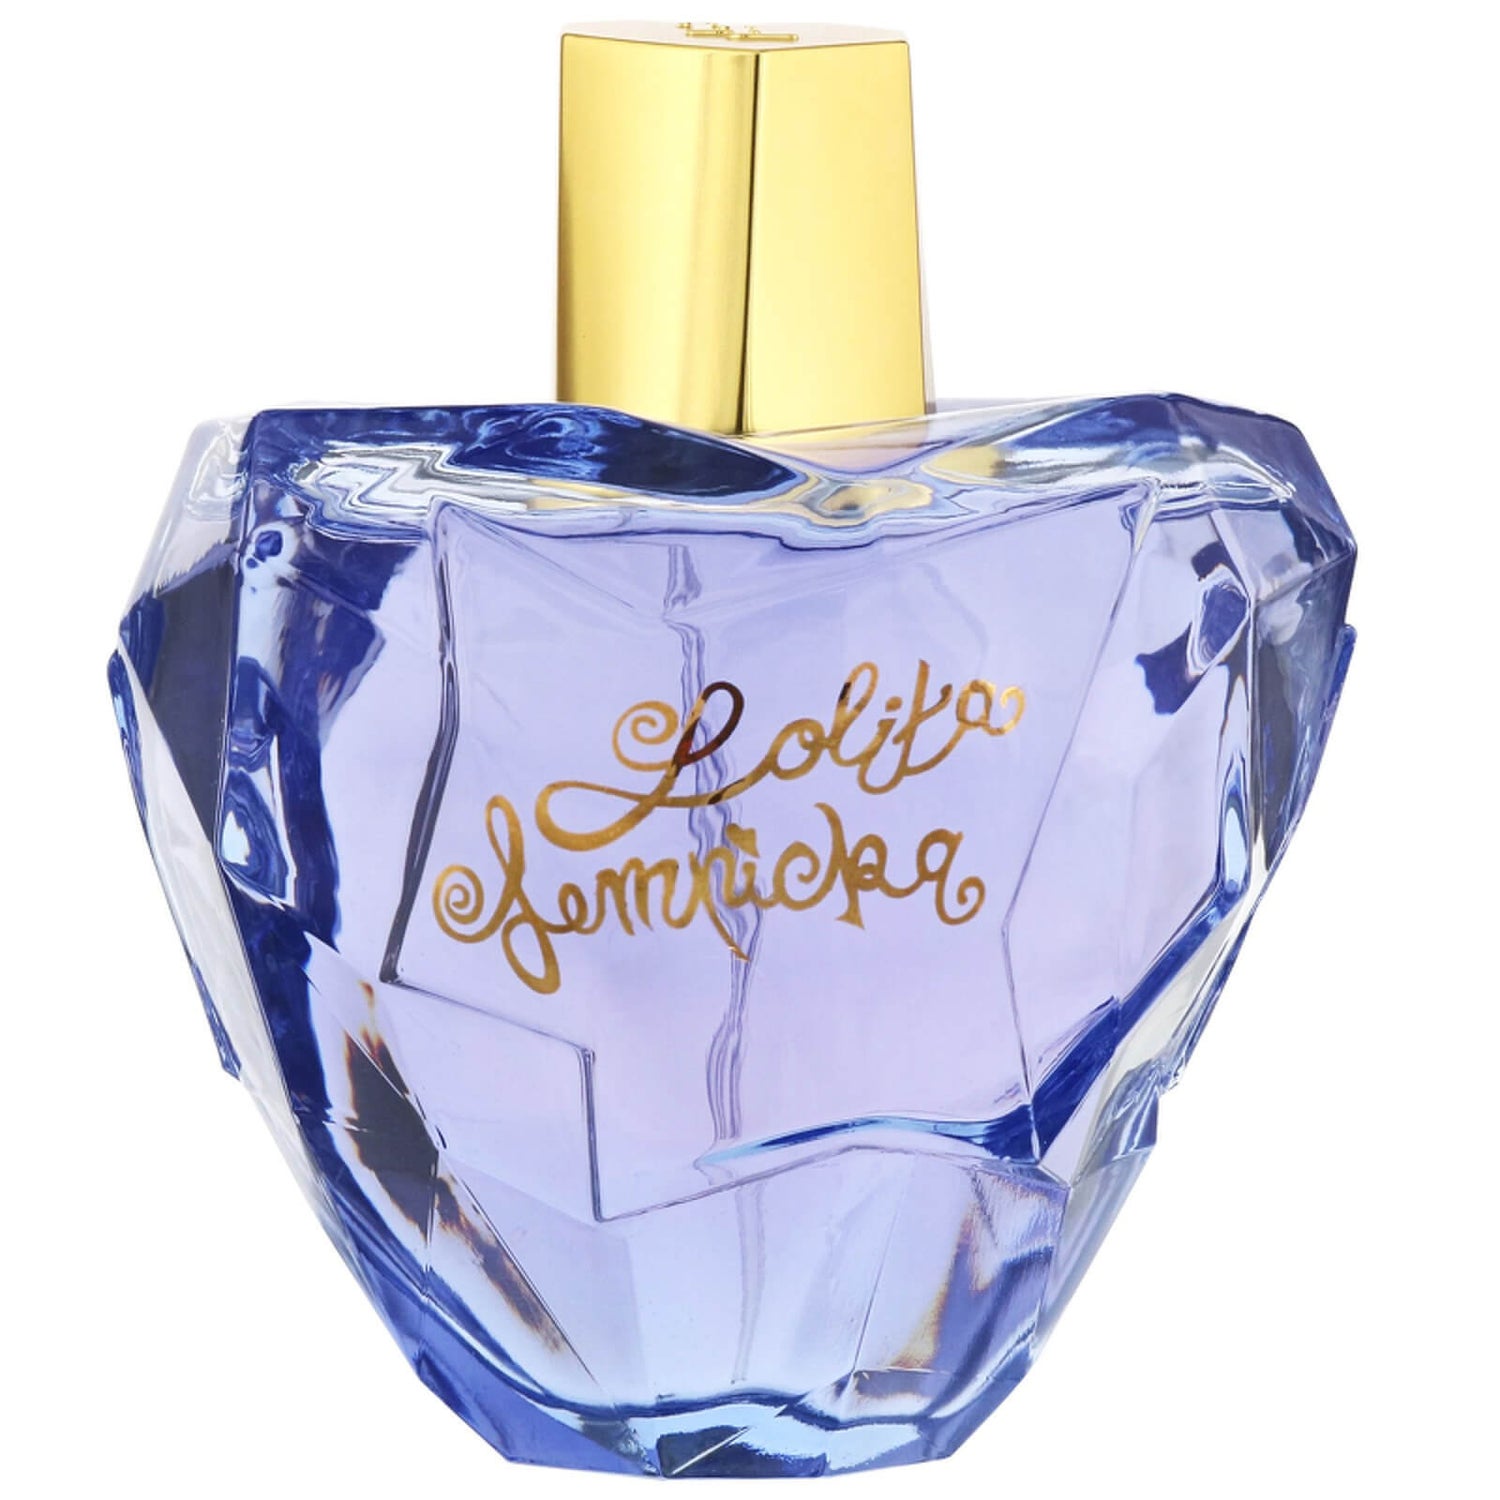 Lolita Lempicka EDP for Women by Lolita Lempicka – Fragrance Outlet